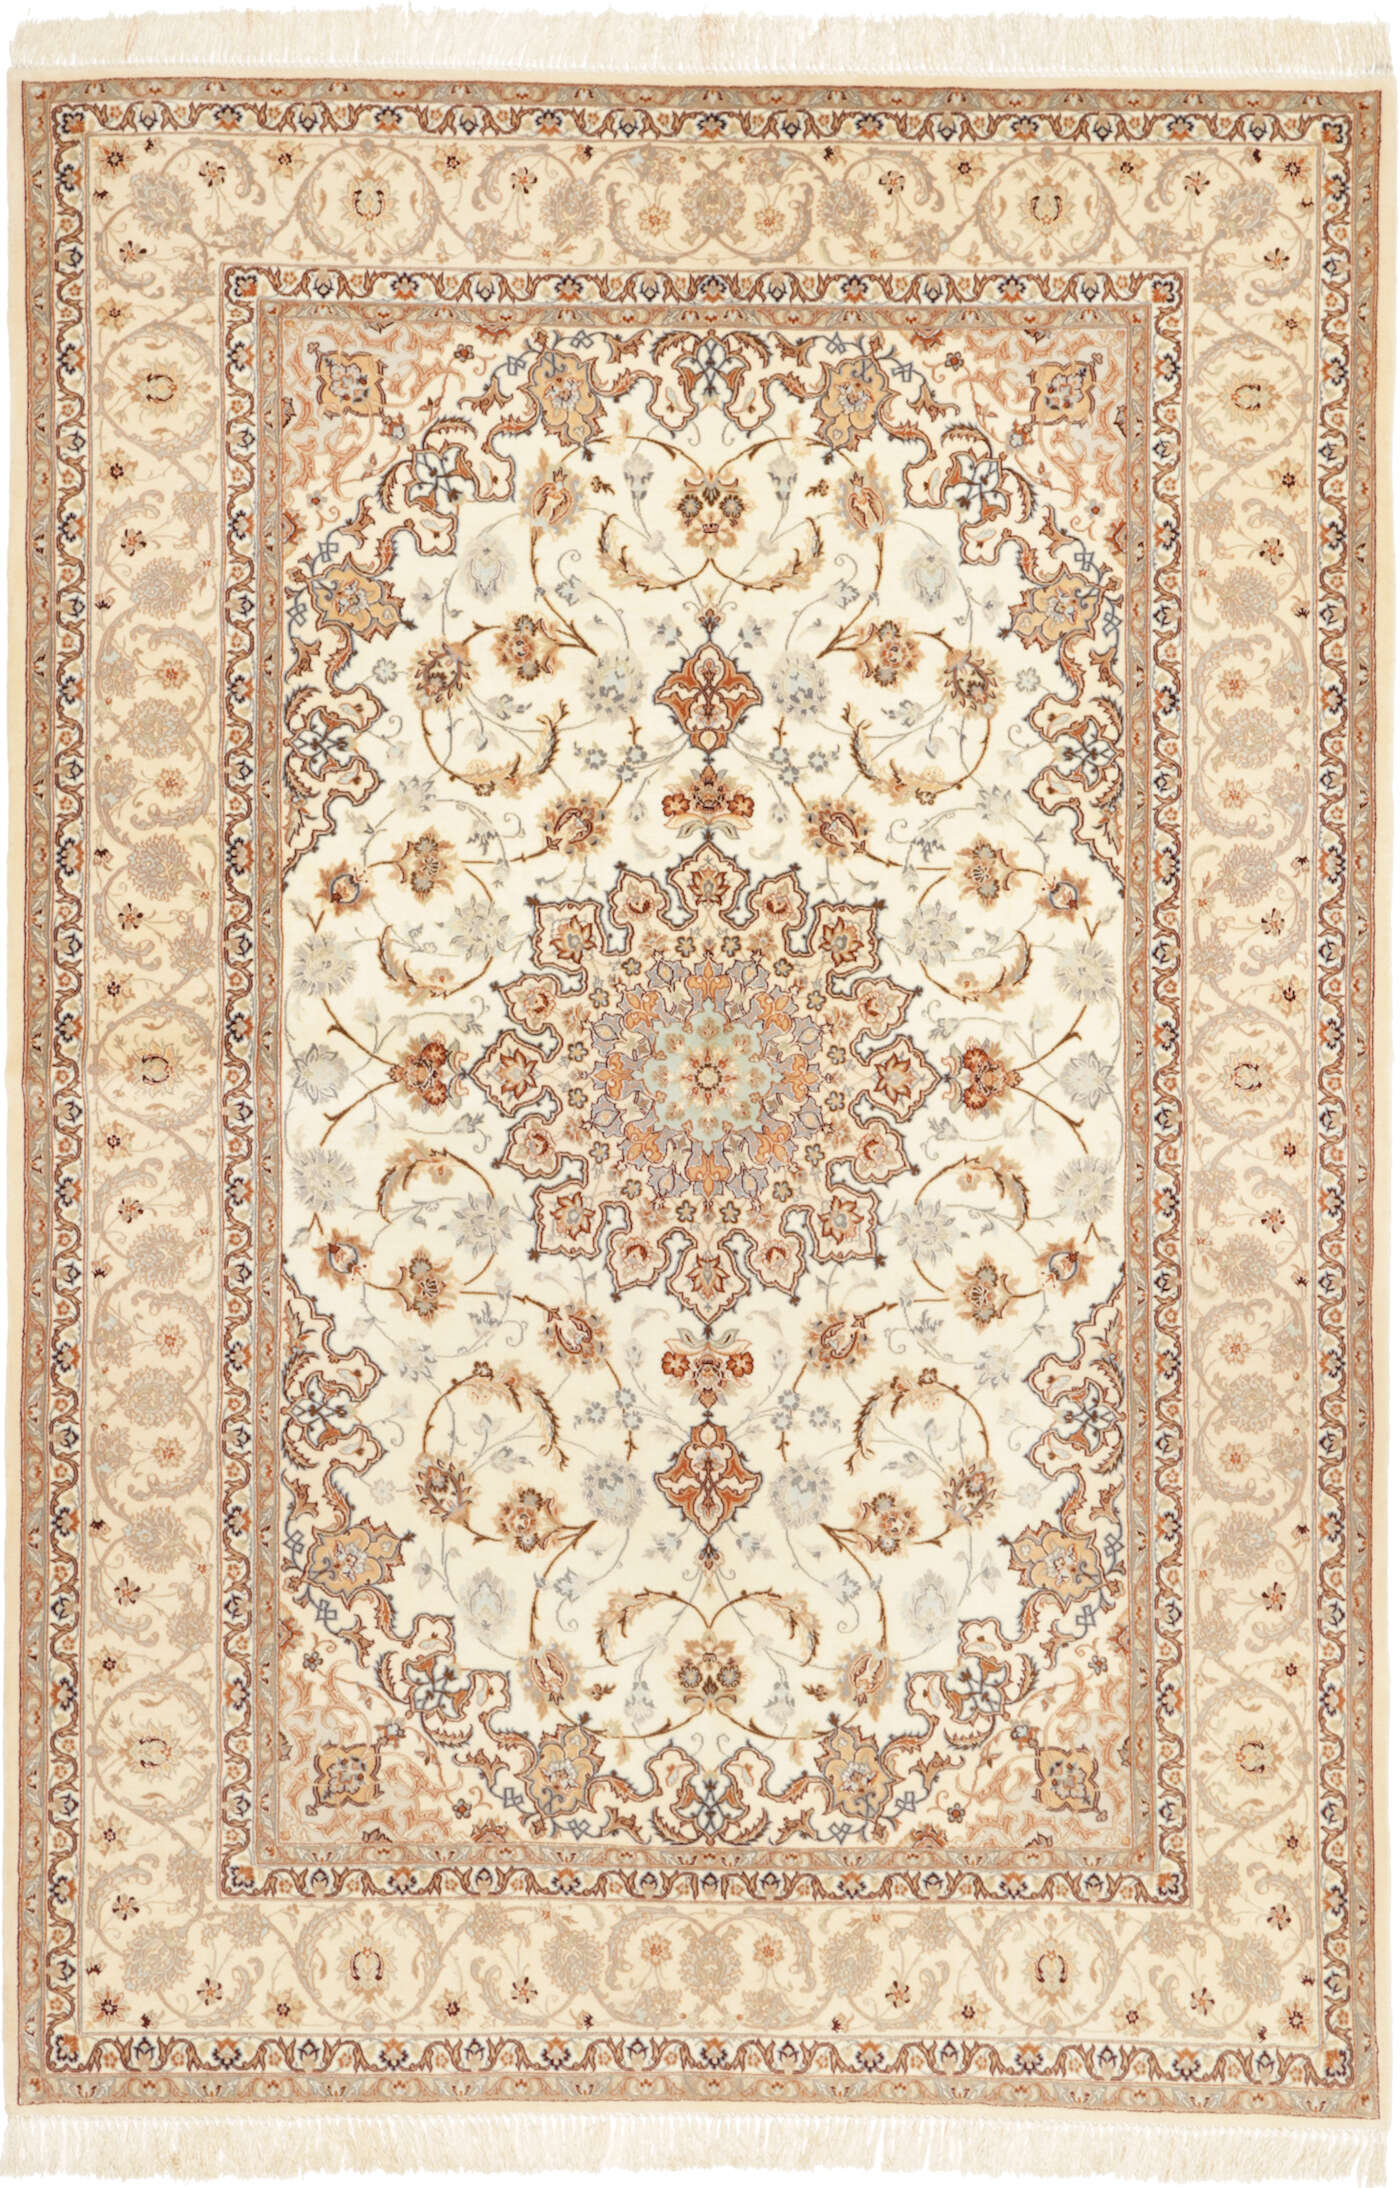 Teppich Isfahan 160x240 cm Orientteppich Iran sehr fein